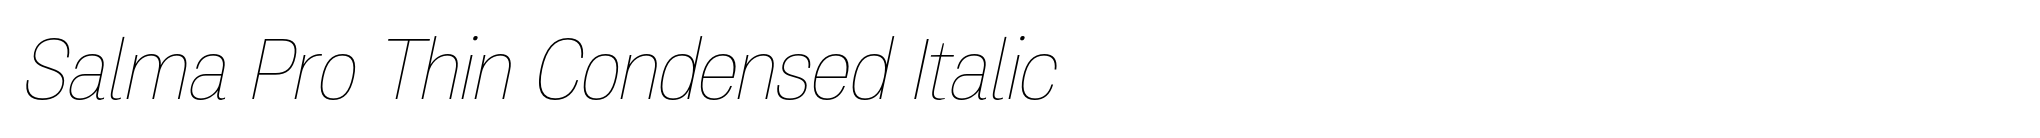 Salma Pro Thin Condensed Italic image